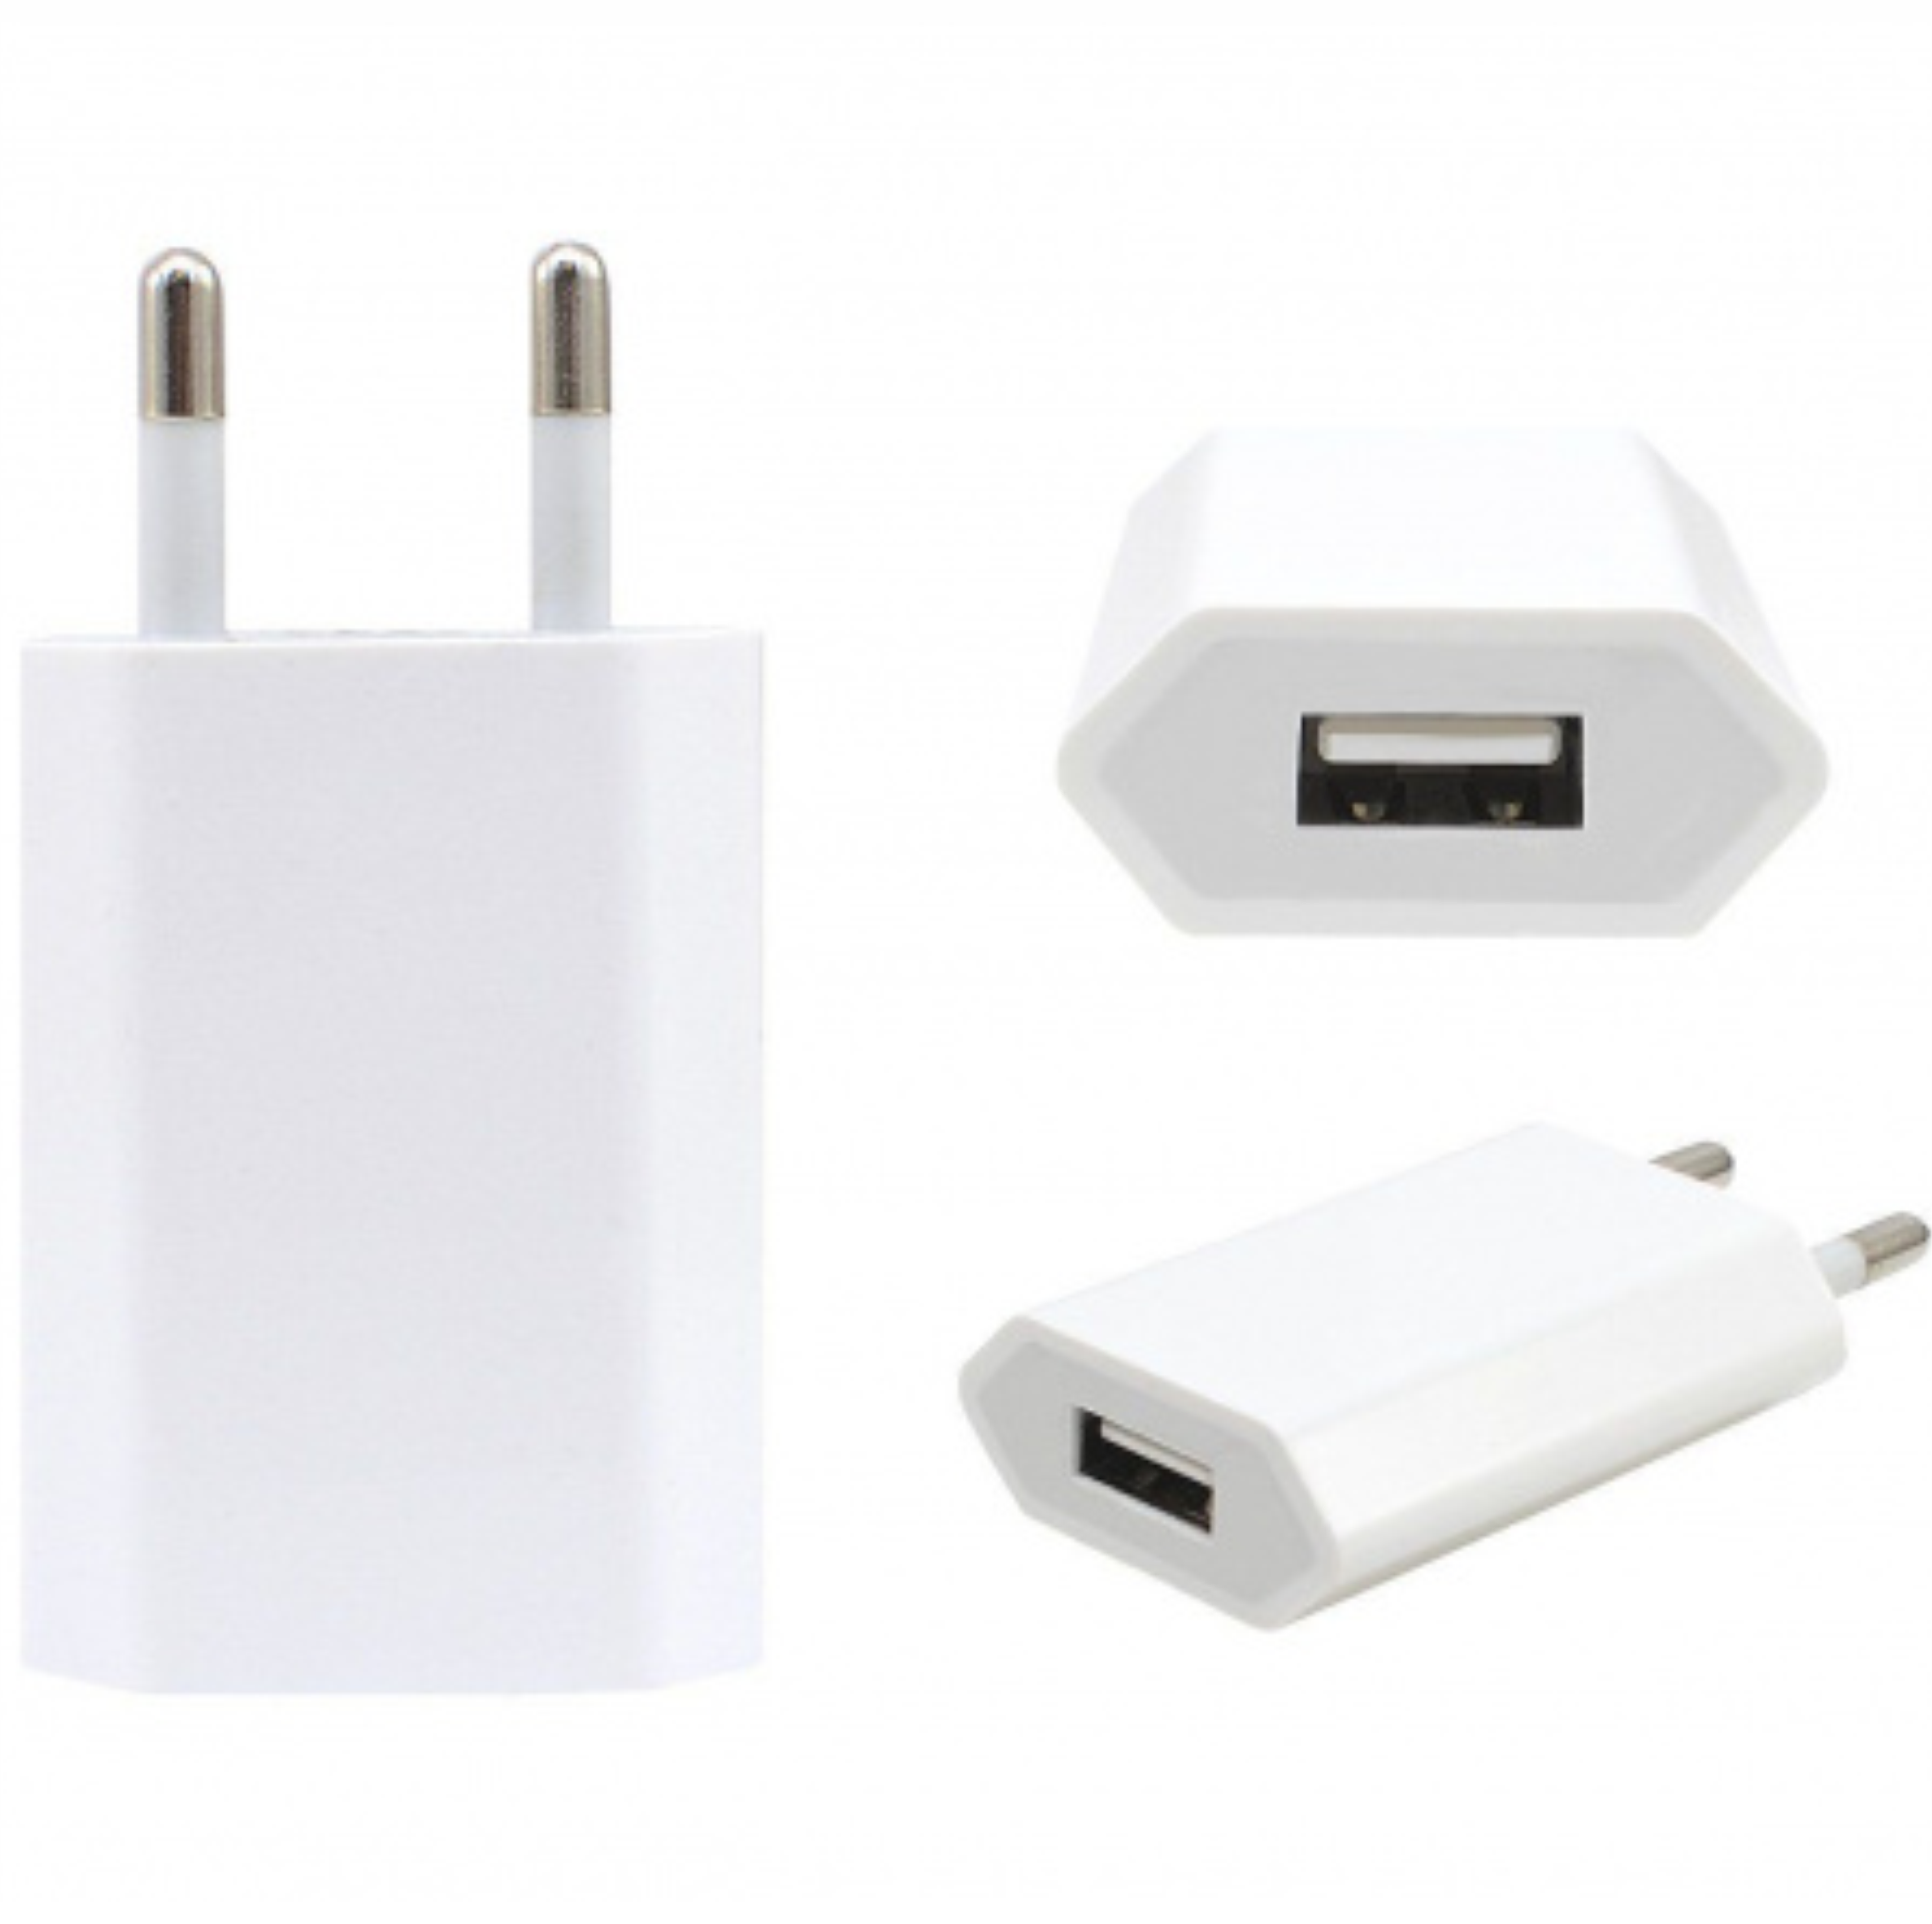 Купить зарядку эпл. Сетевое зарядное устройство Apple md813zm/a белый. Сетевое зарядное устройство Apple md813zm/a, 5 Вт. Зарядное устройство Apple a1400. Адаптер питания Apple USB 5w.